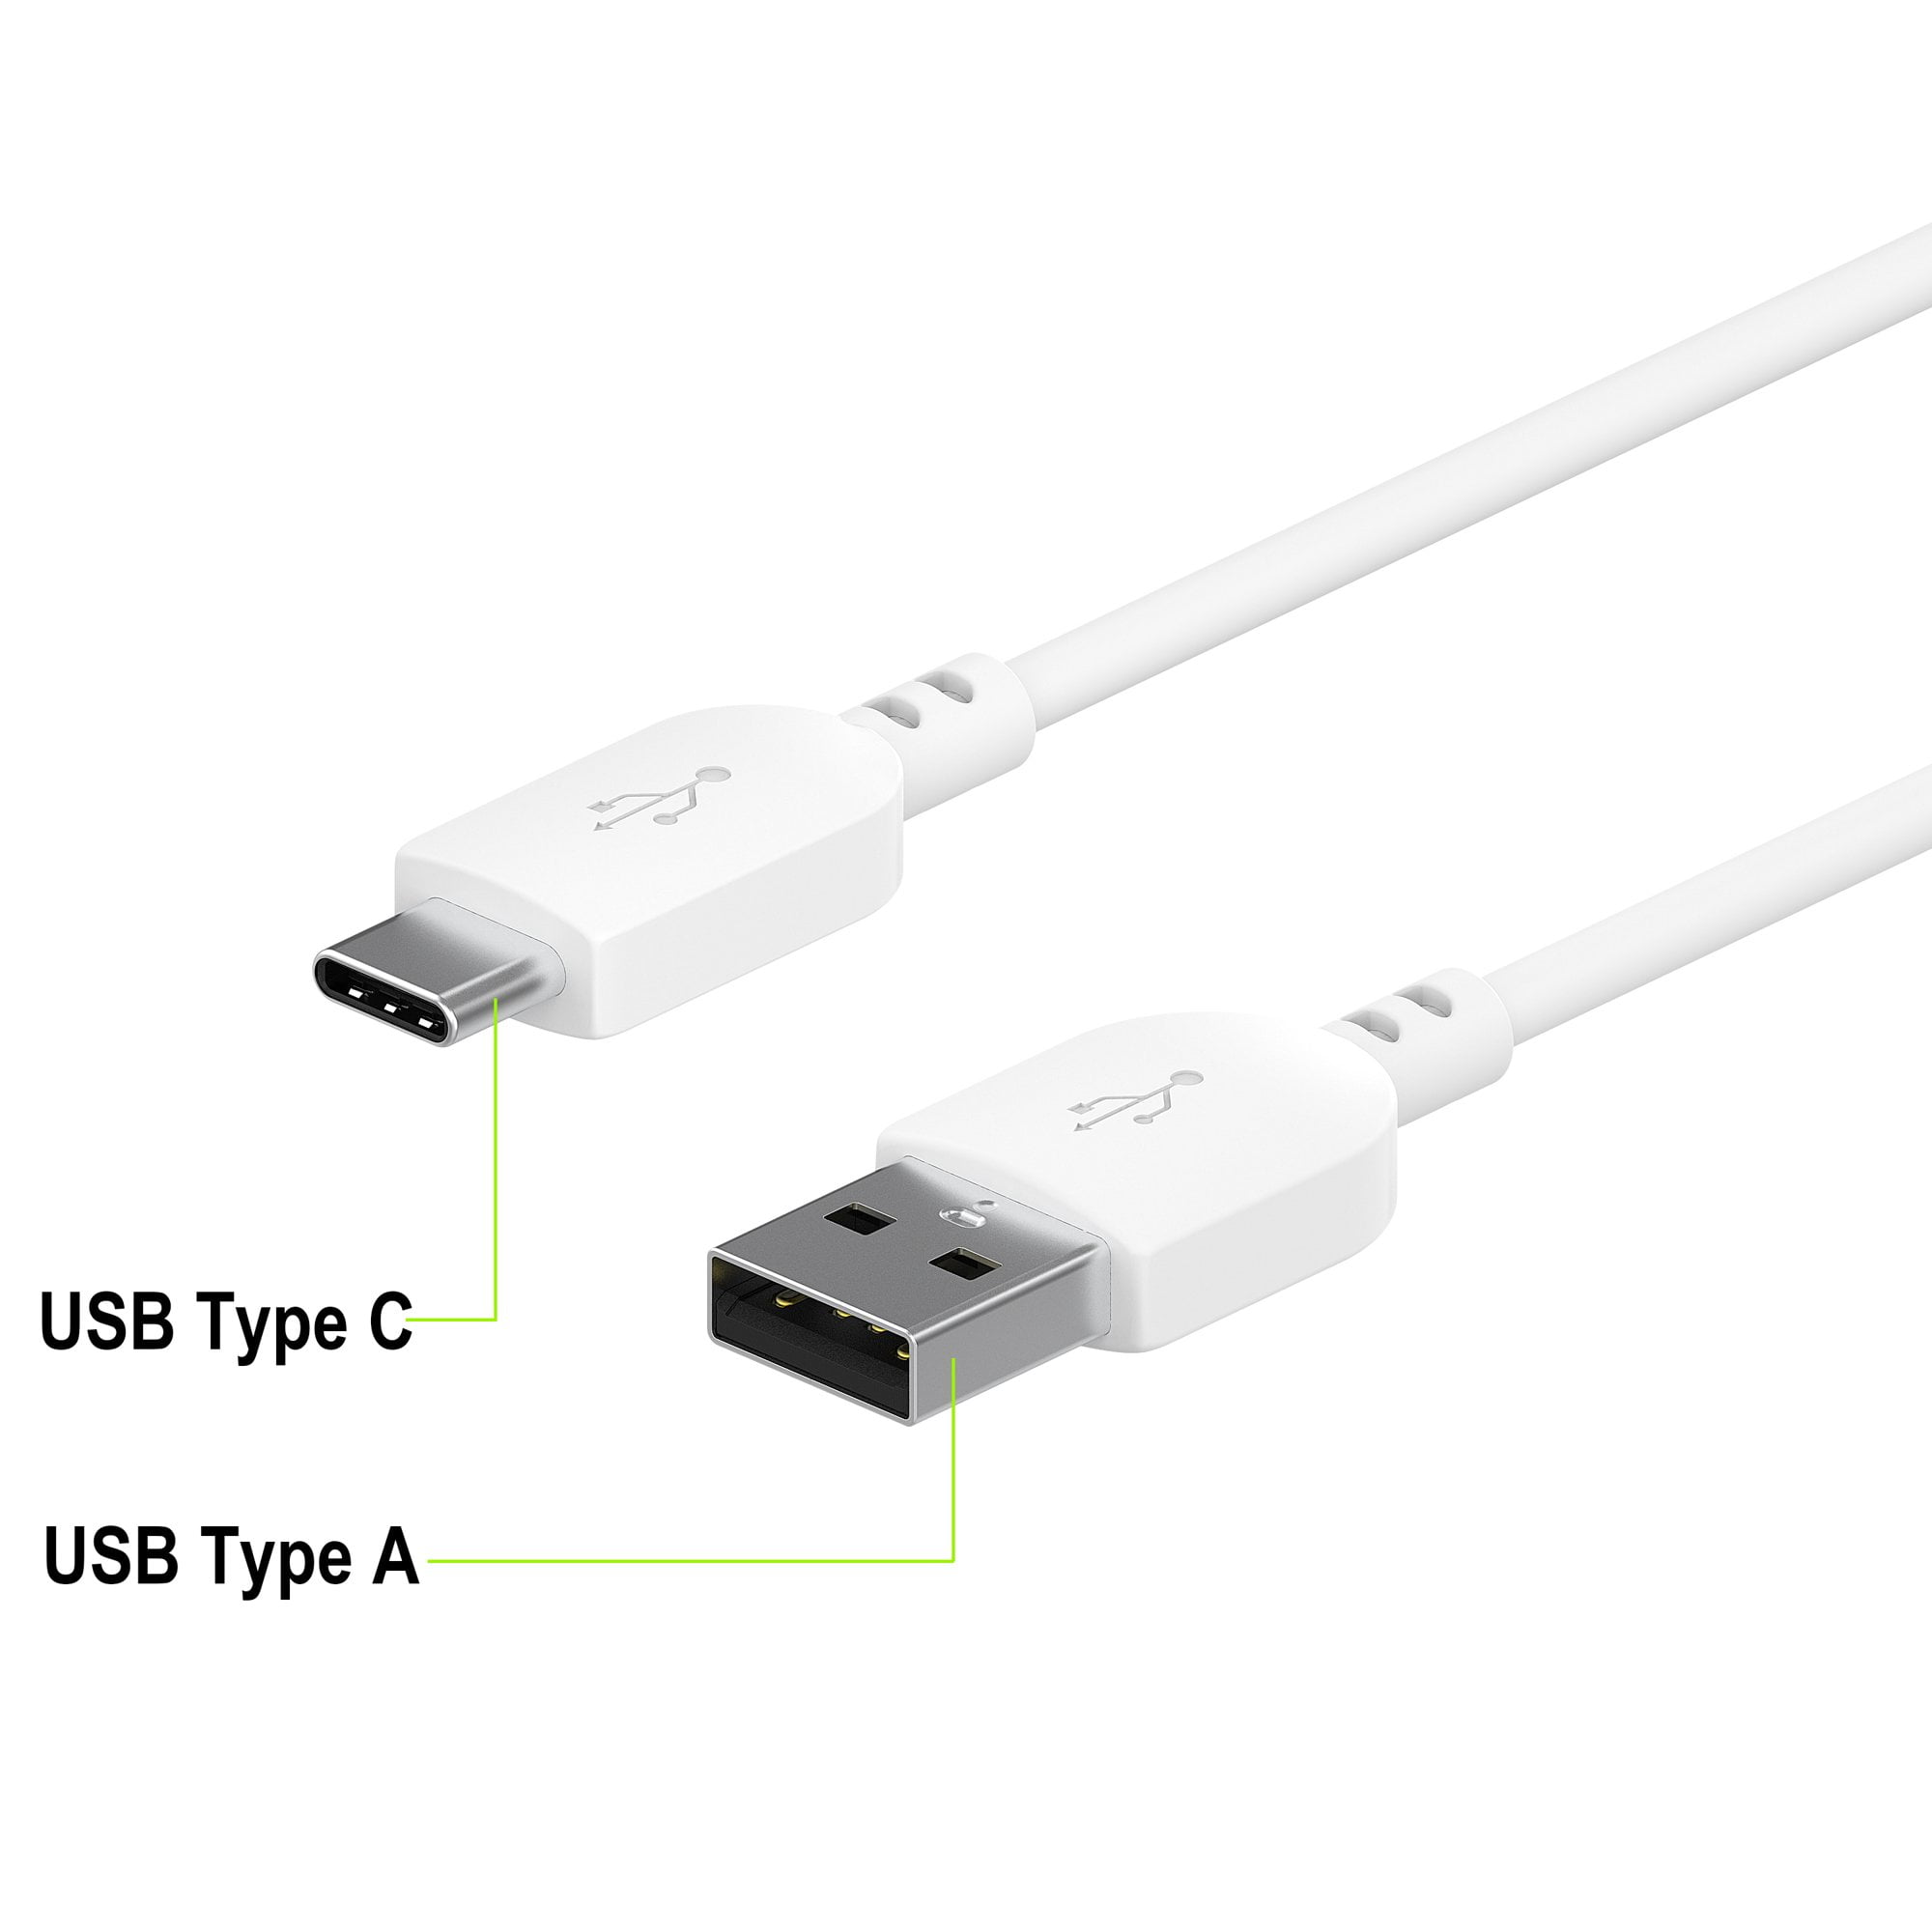 Nitecore USB-C to USB-C, cable  Advantageously shopping at